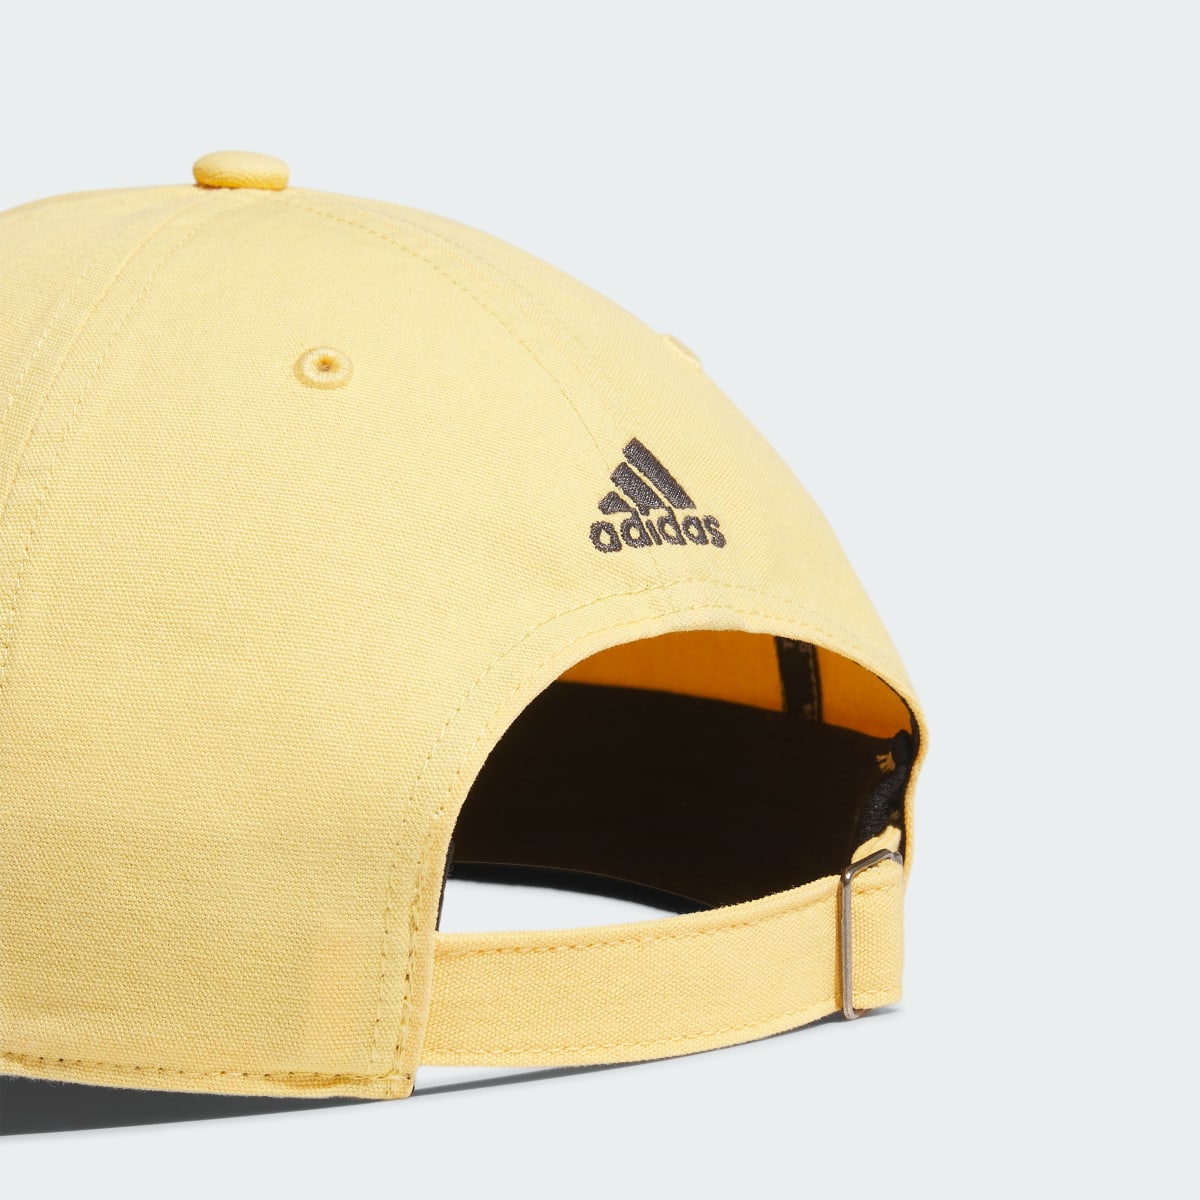 Adidas Ultimate Hat. 7